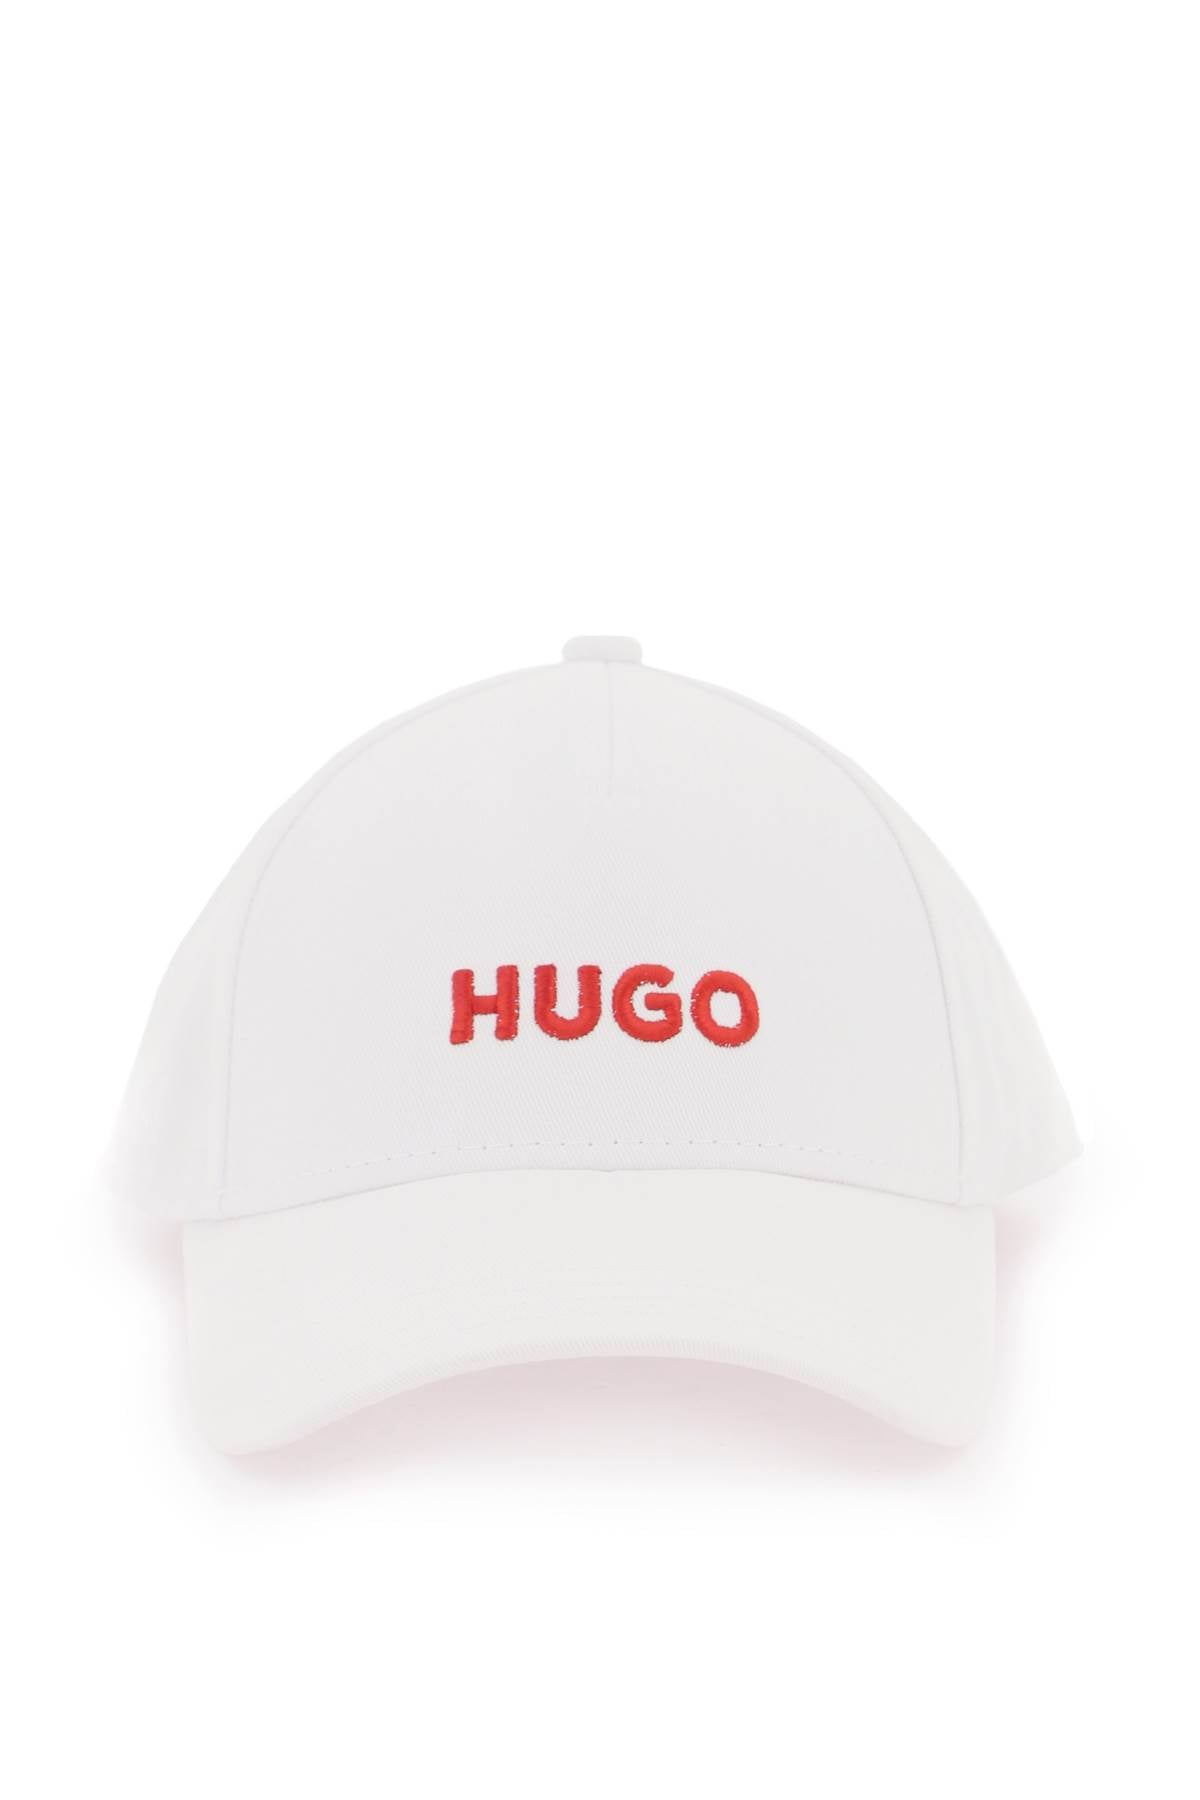 Hugo baseball cap with embroidered logo-0